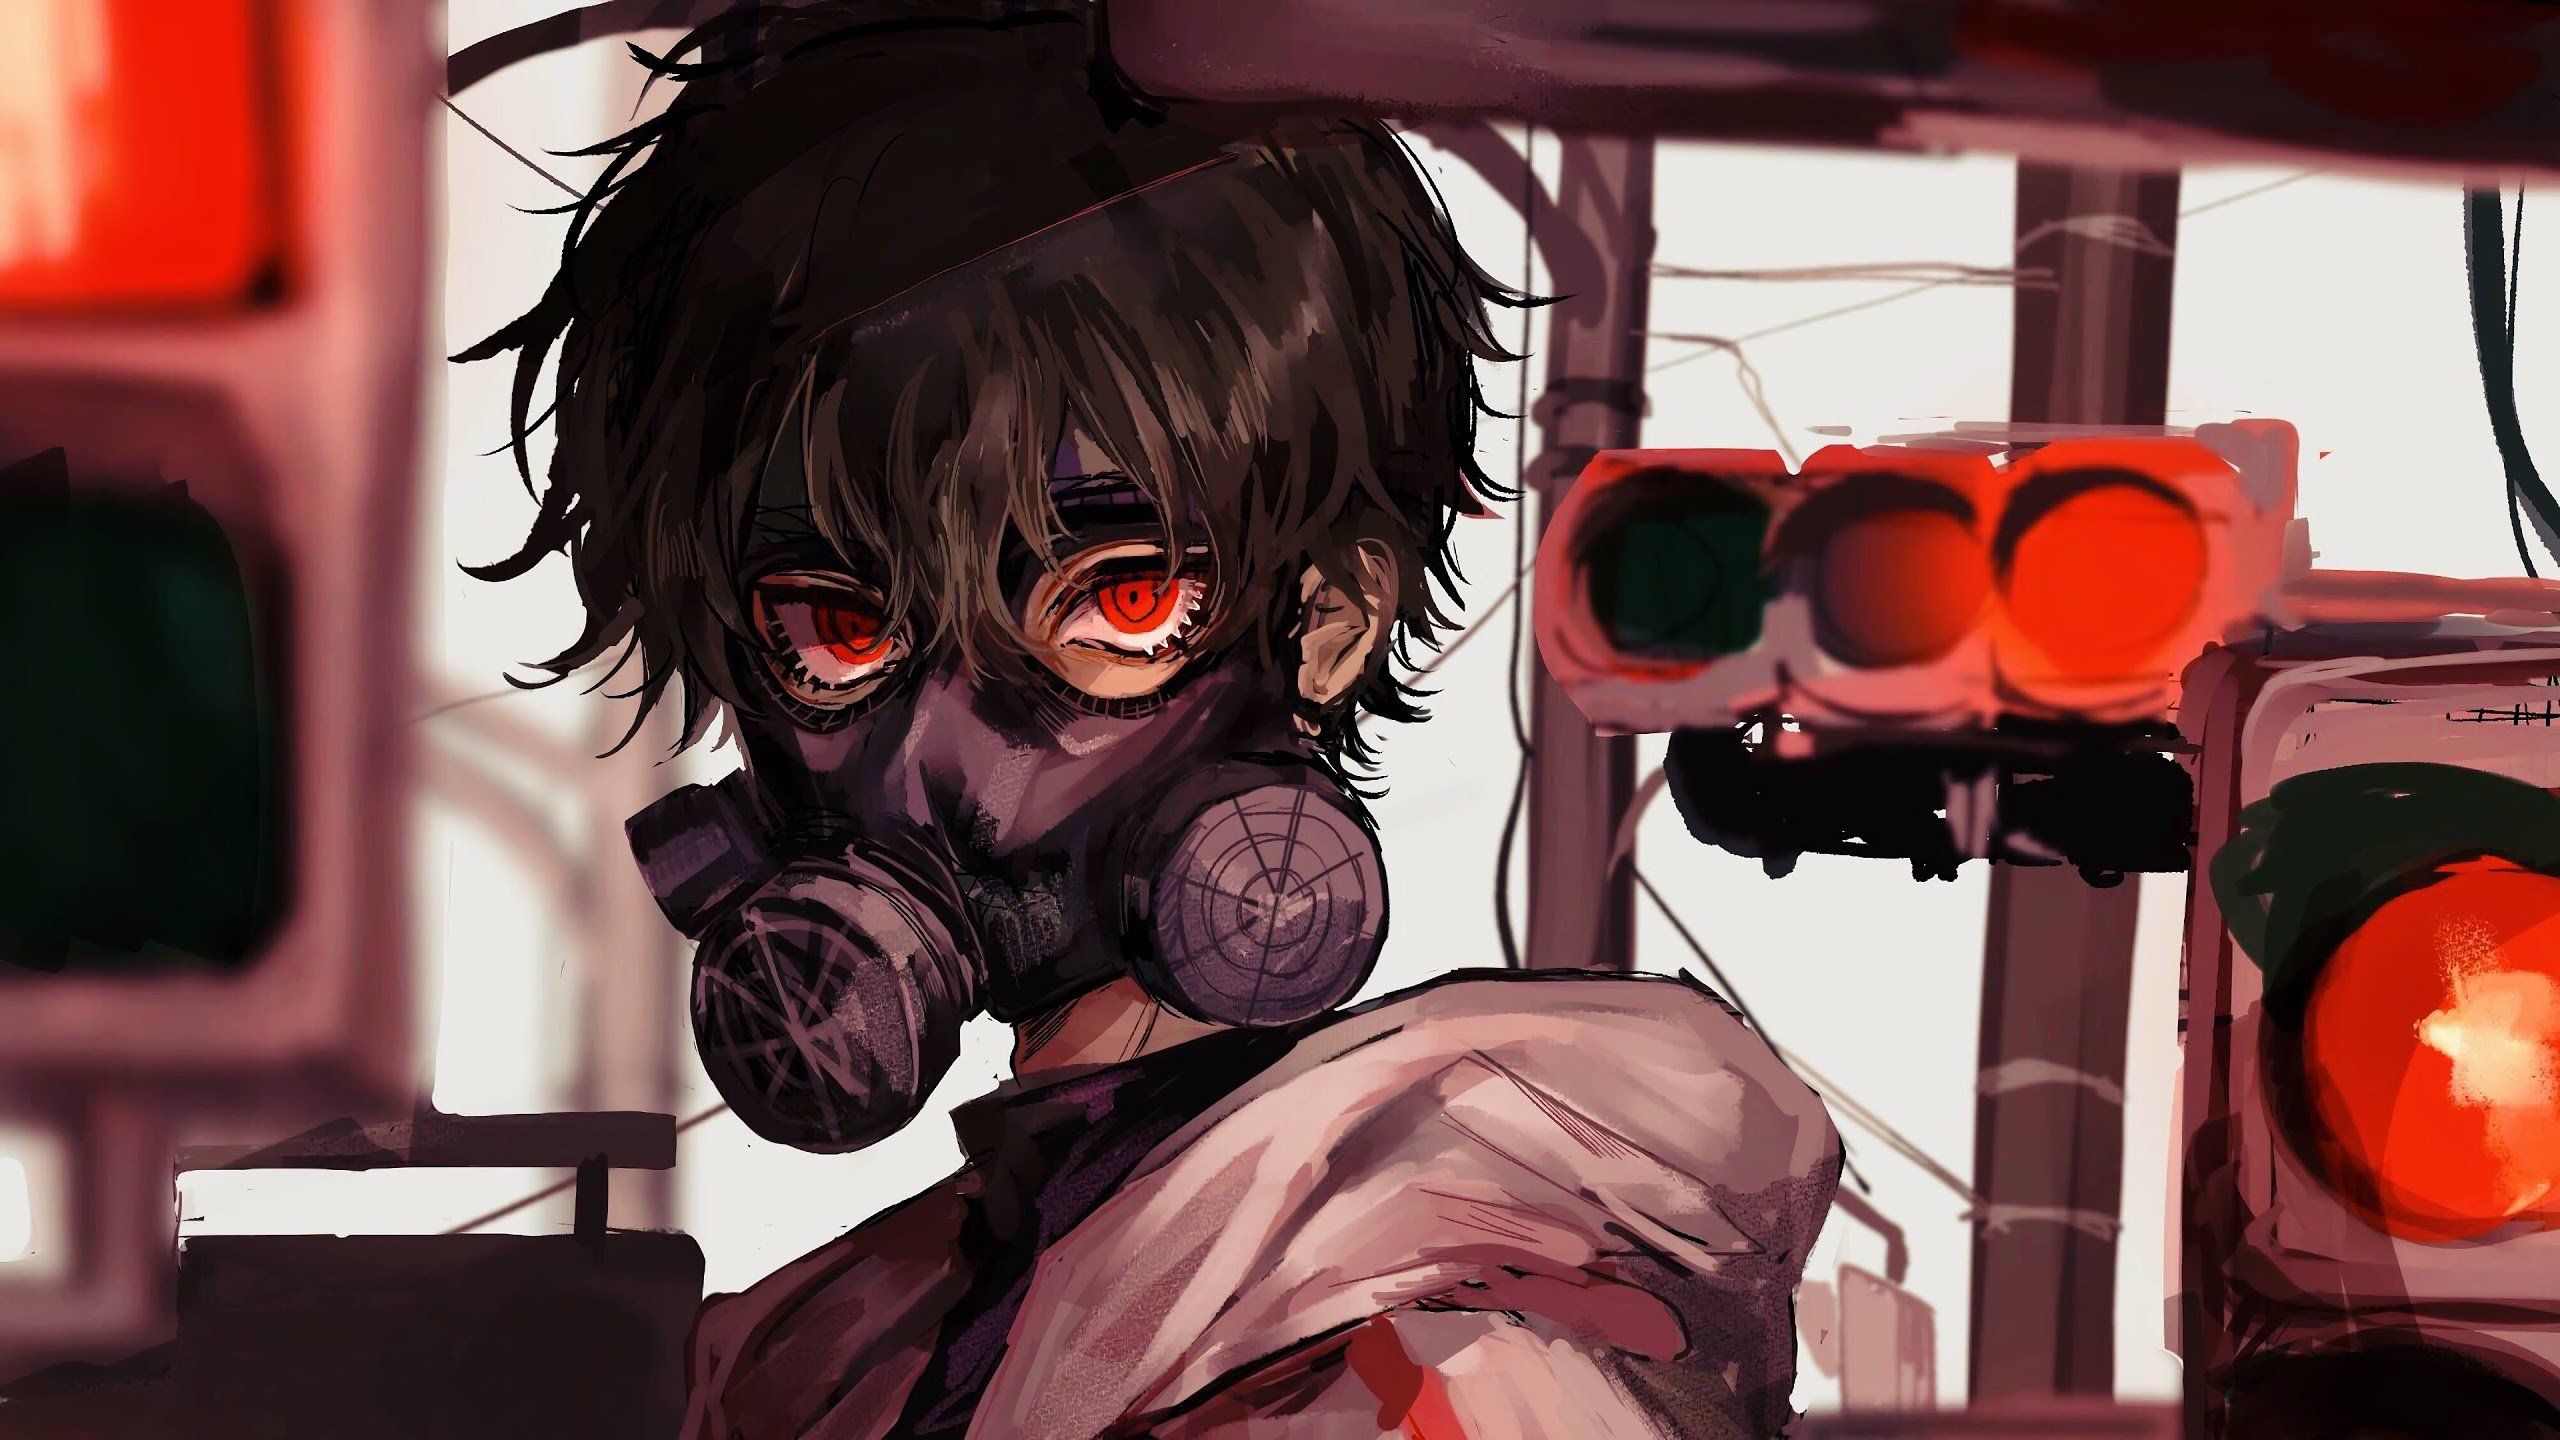 Wallpaper Anime Red Eyes Boy